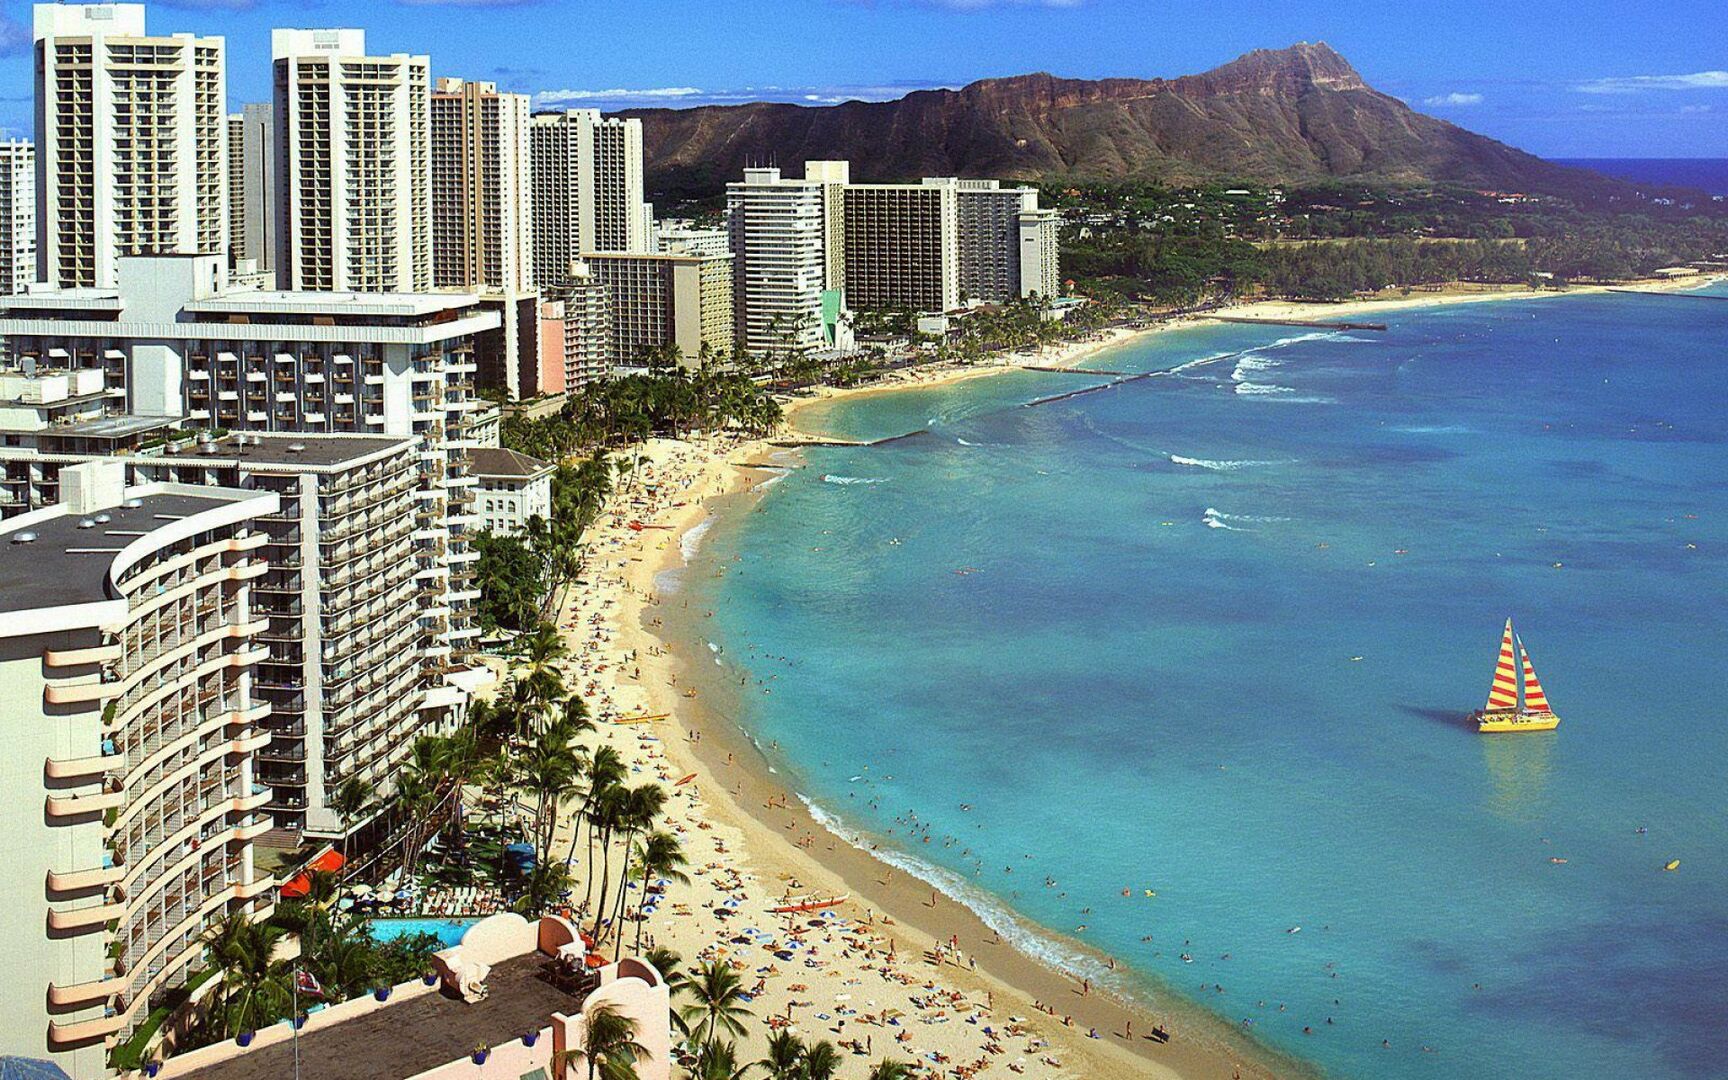 Waikiki Banyan beach and the iconic Diamond Head